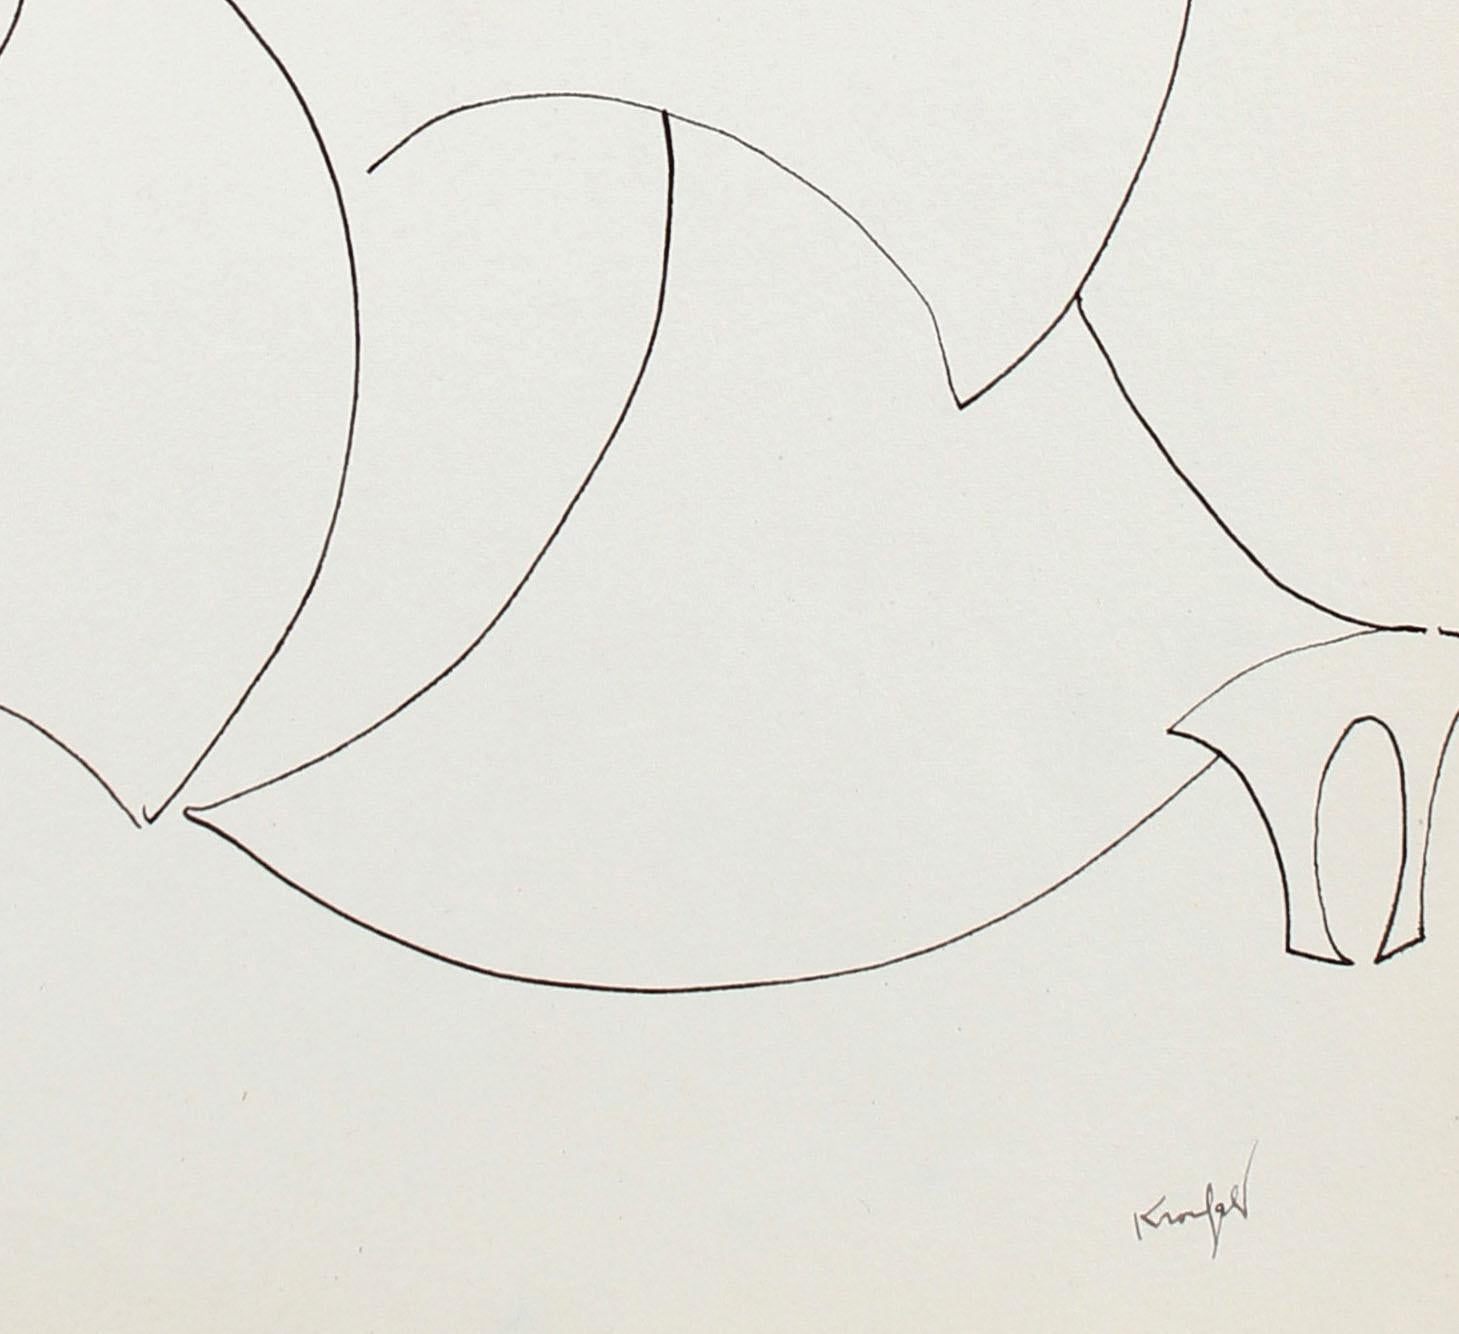 1960s-80s Minimalist Abstract Line Drawing in Ink - Art by Morris Kronfeld